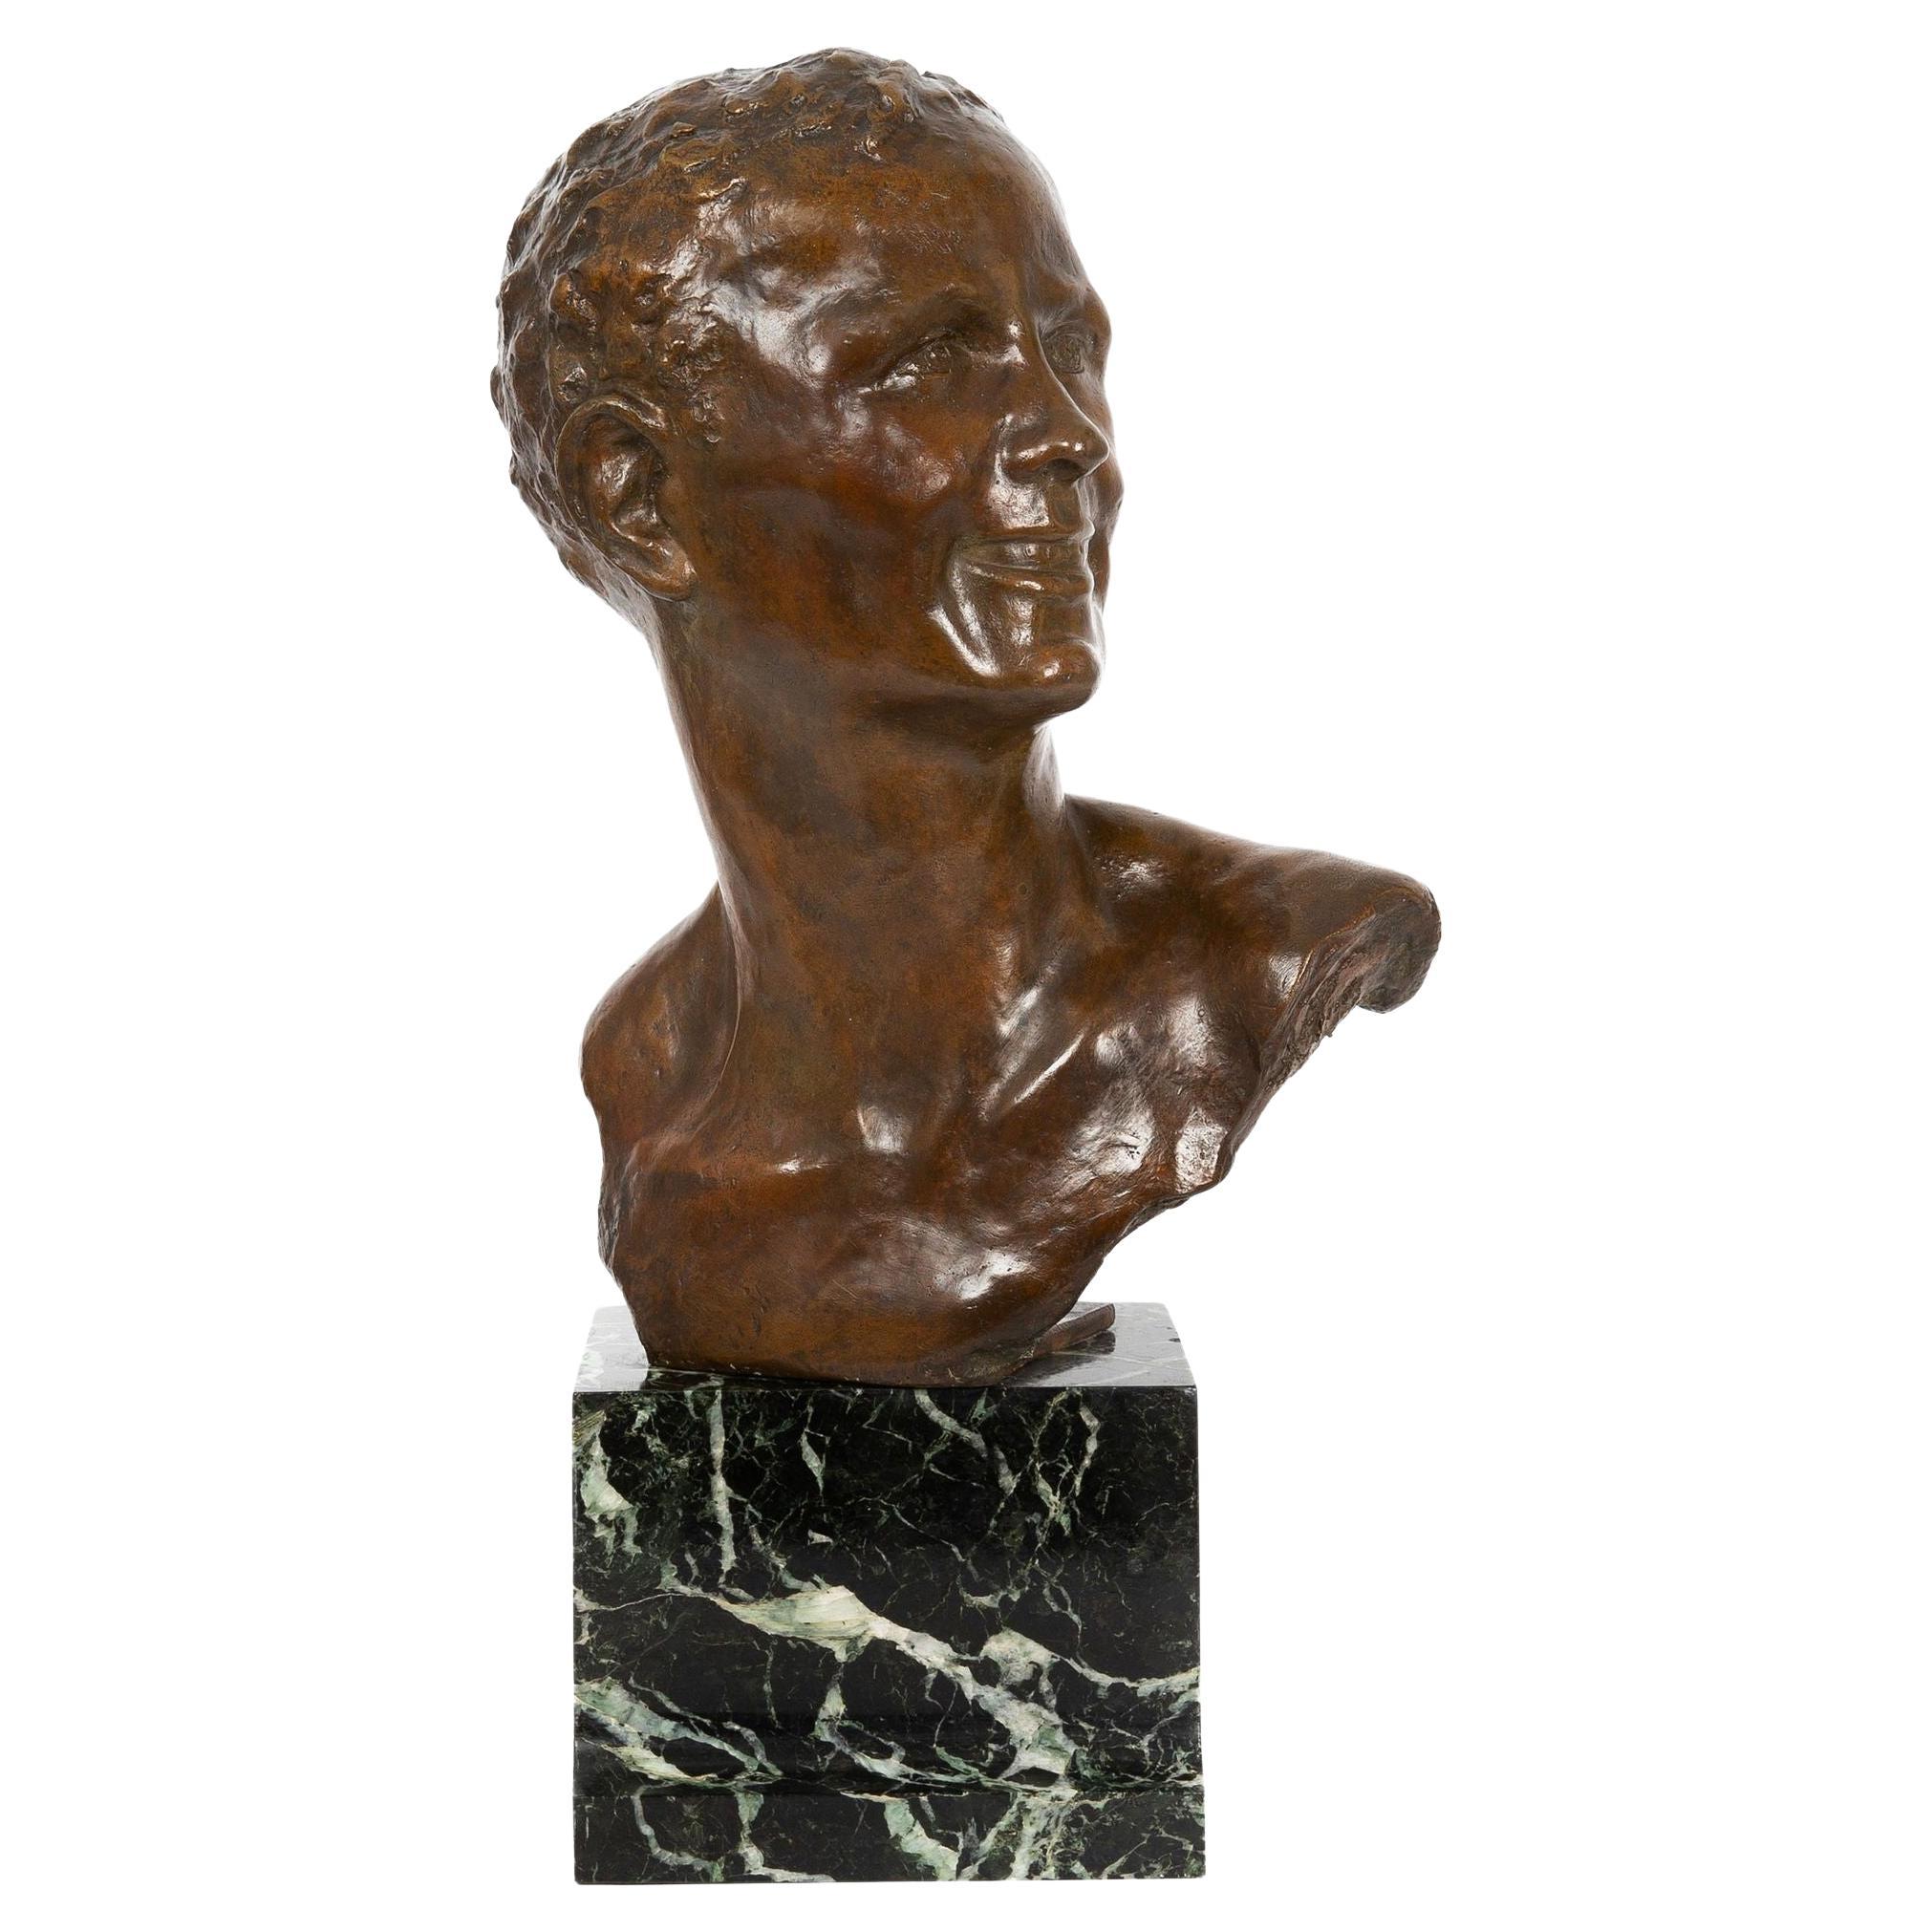 French Art Deco Modernist Bronze Sculpture, Bust of Young Man, Alfredo Pina